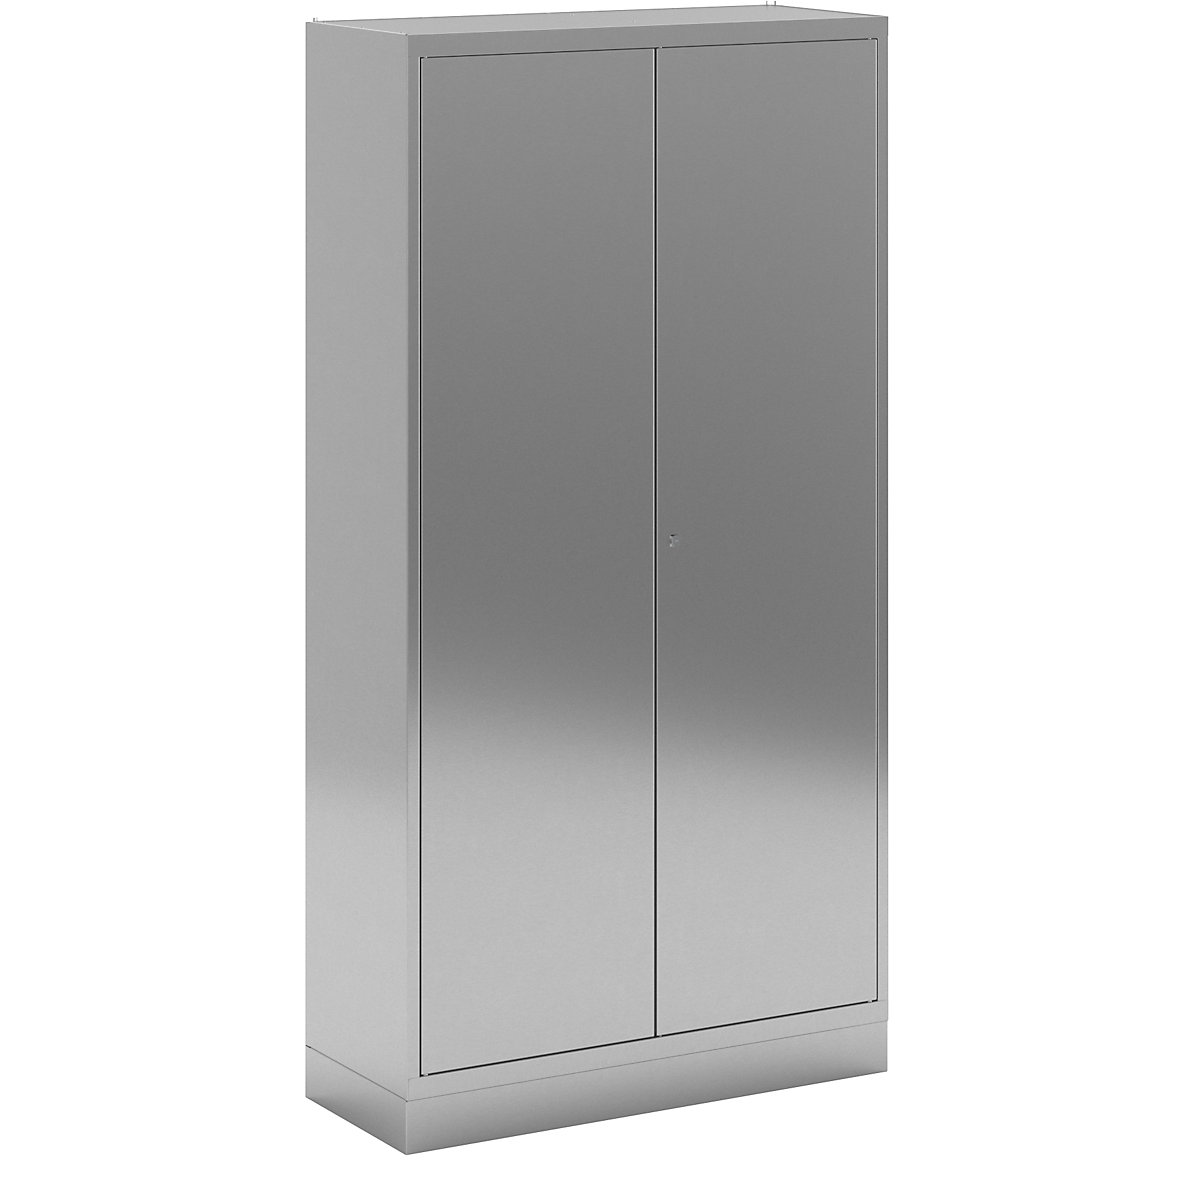 Stainless steel multi-purpose cupboard